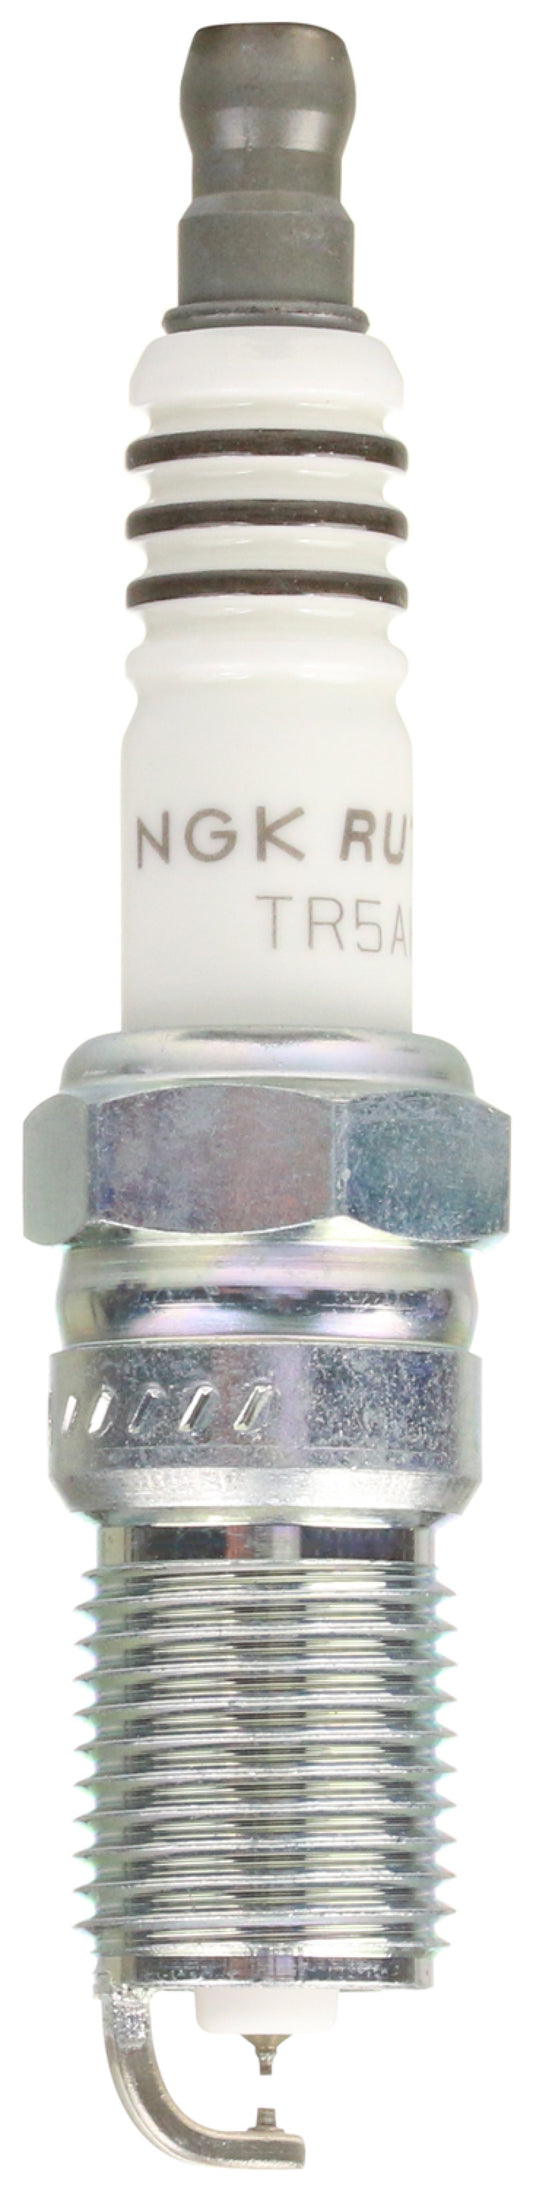 NGK Ruthenium HX Spark Plug Box of 4 (TR5AHX)